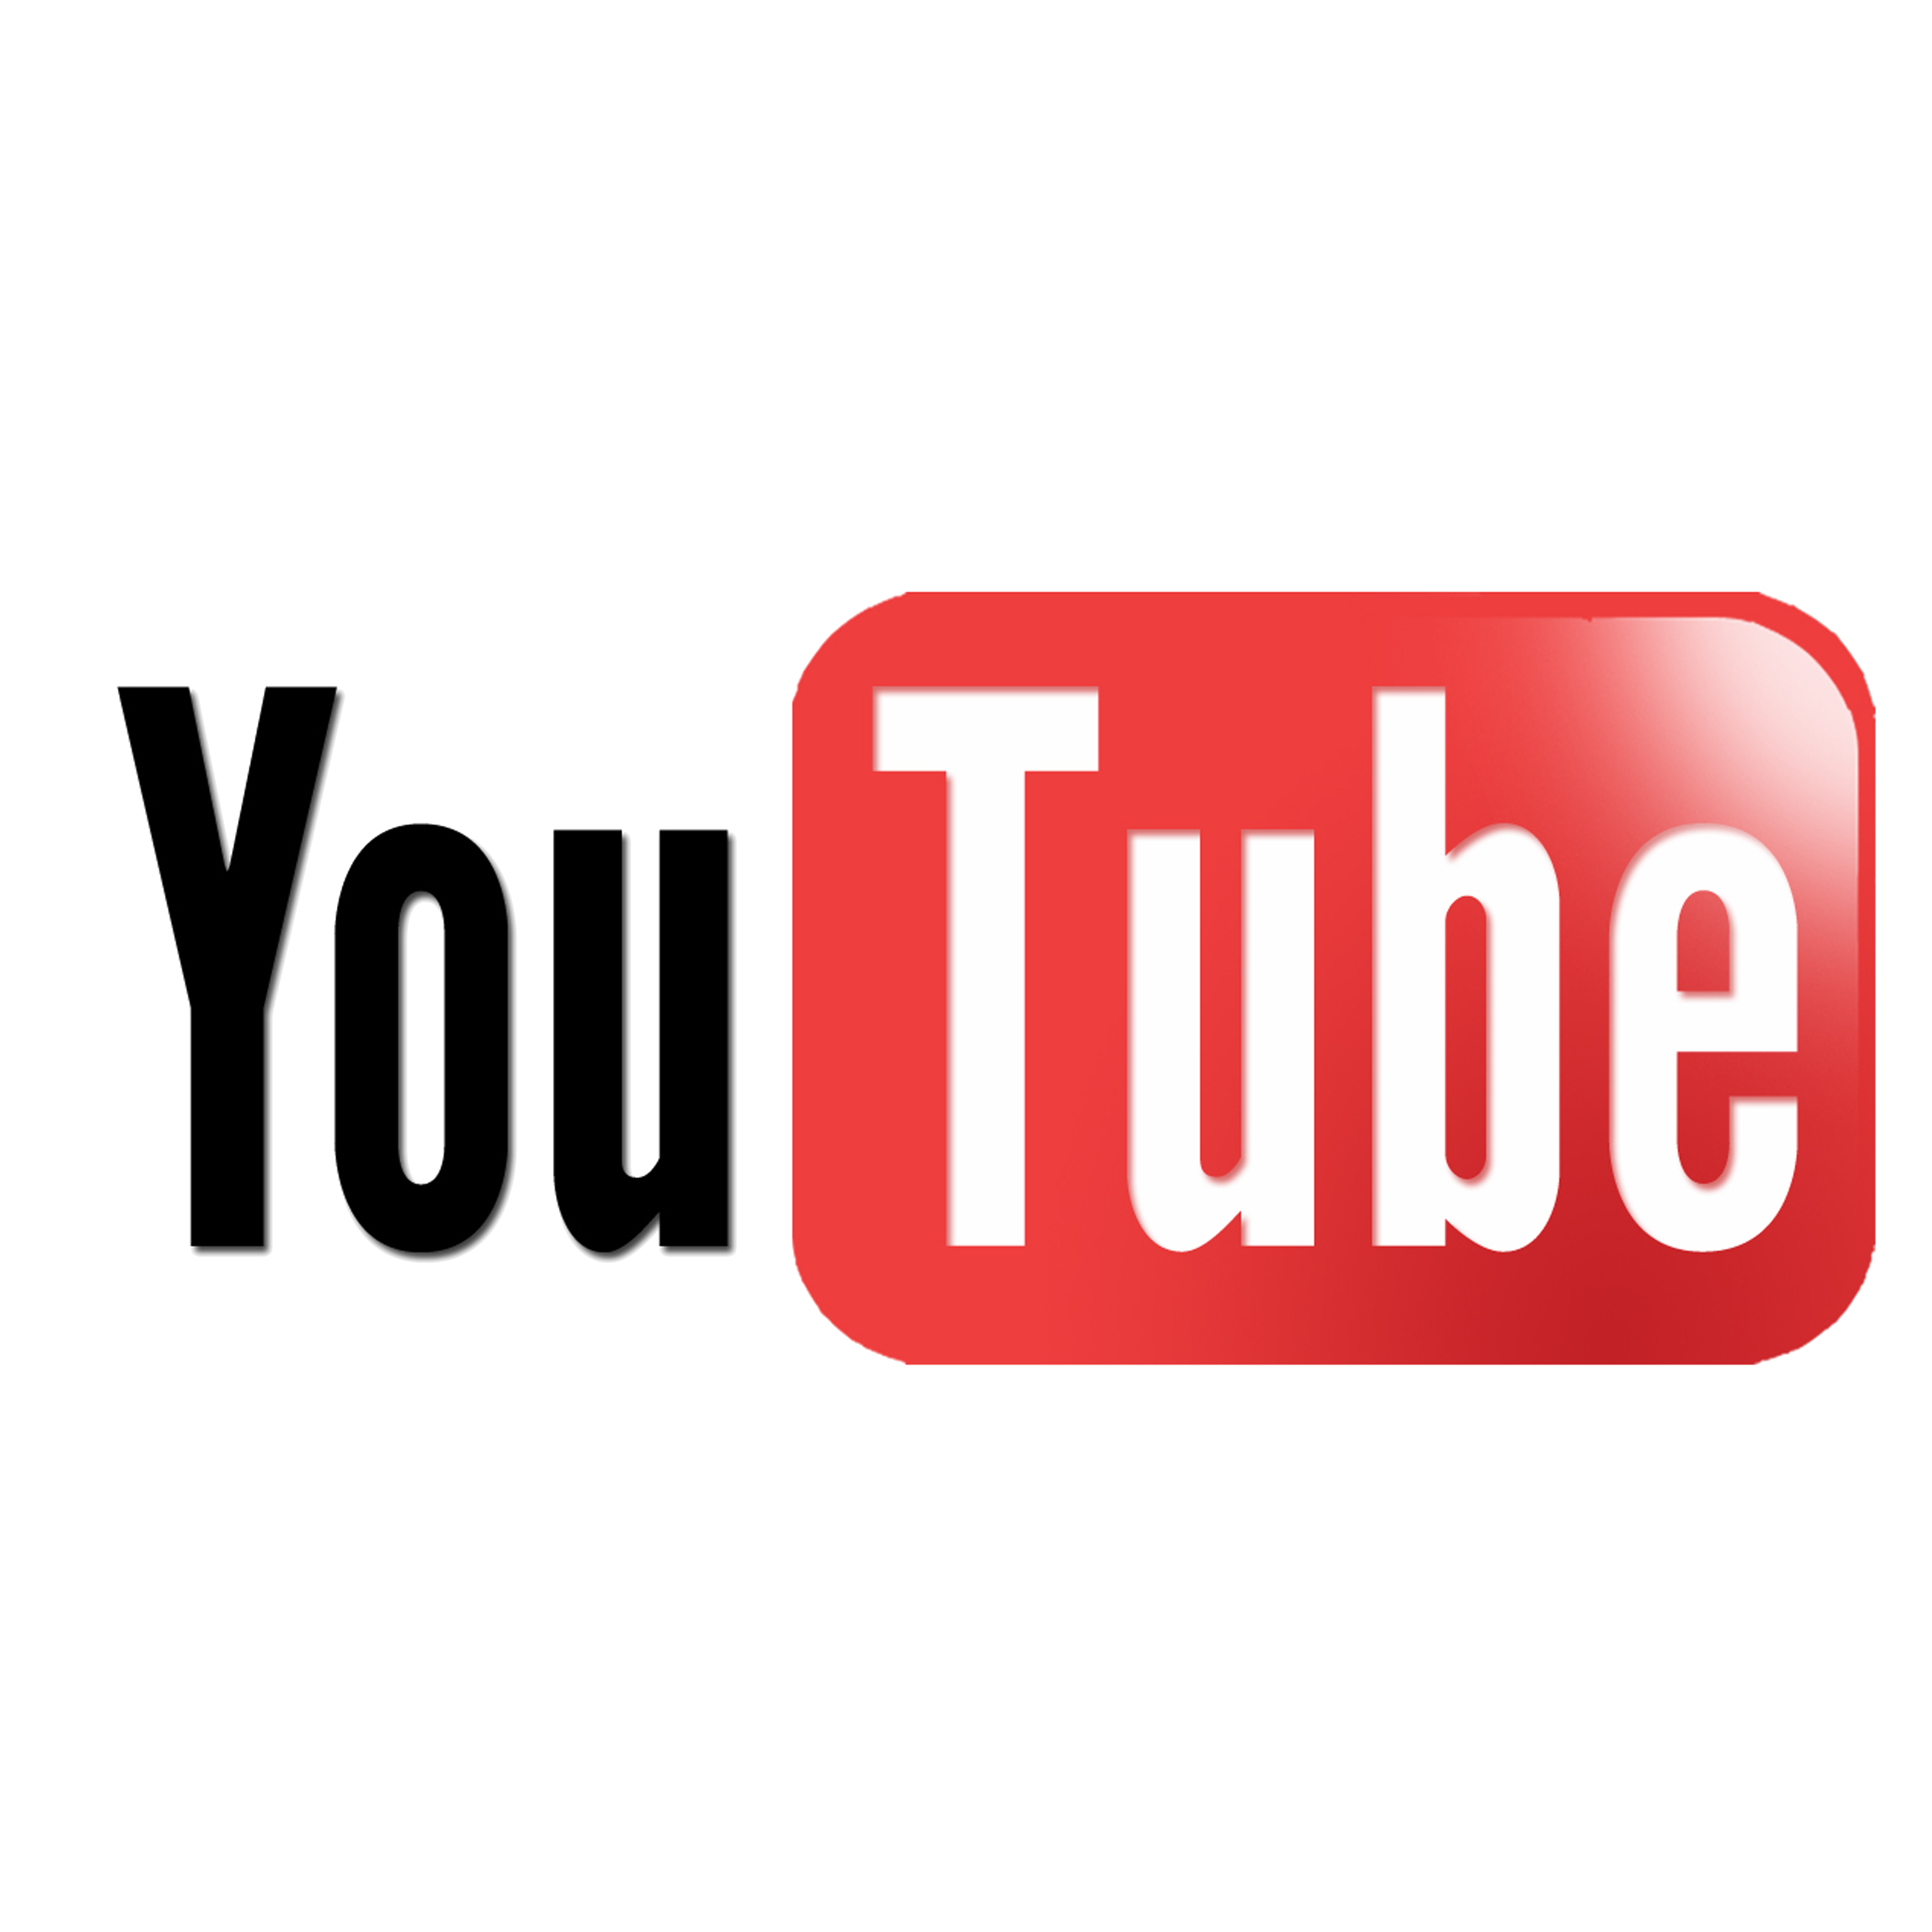 youtube music logo png white